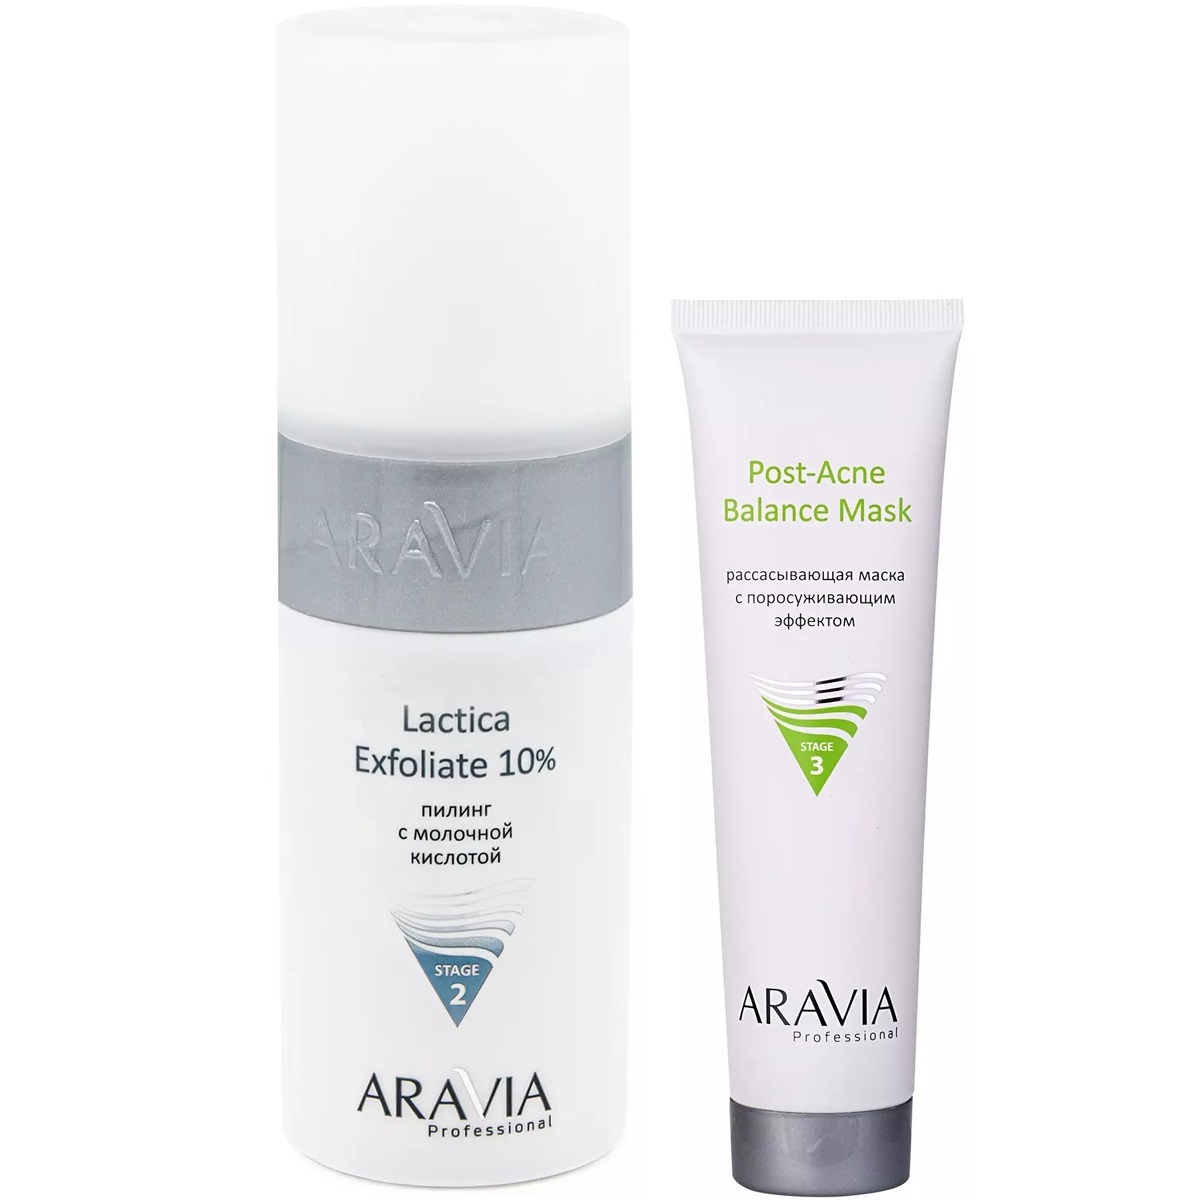 Aravia Professional Набор Чистая кожа: маска, 100 мл + пилинг, 150 мл (Aravia Professional, Уход за лицом) rere набор косметики для проблемной и жирной кожи